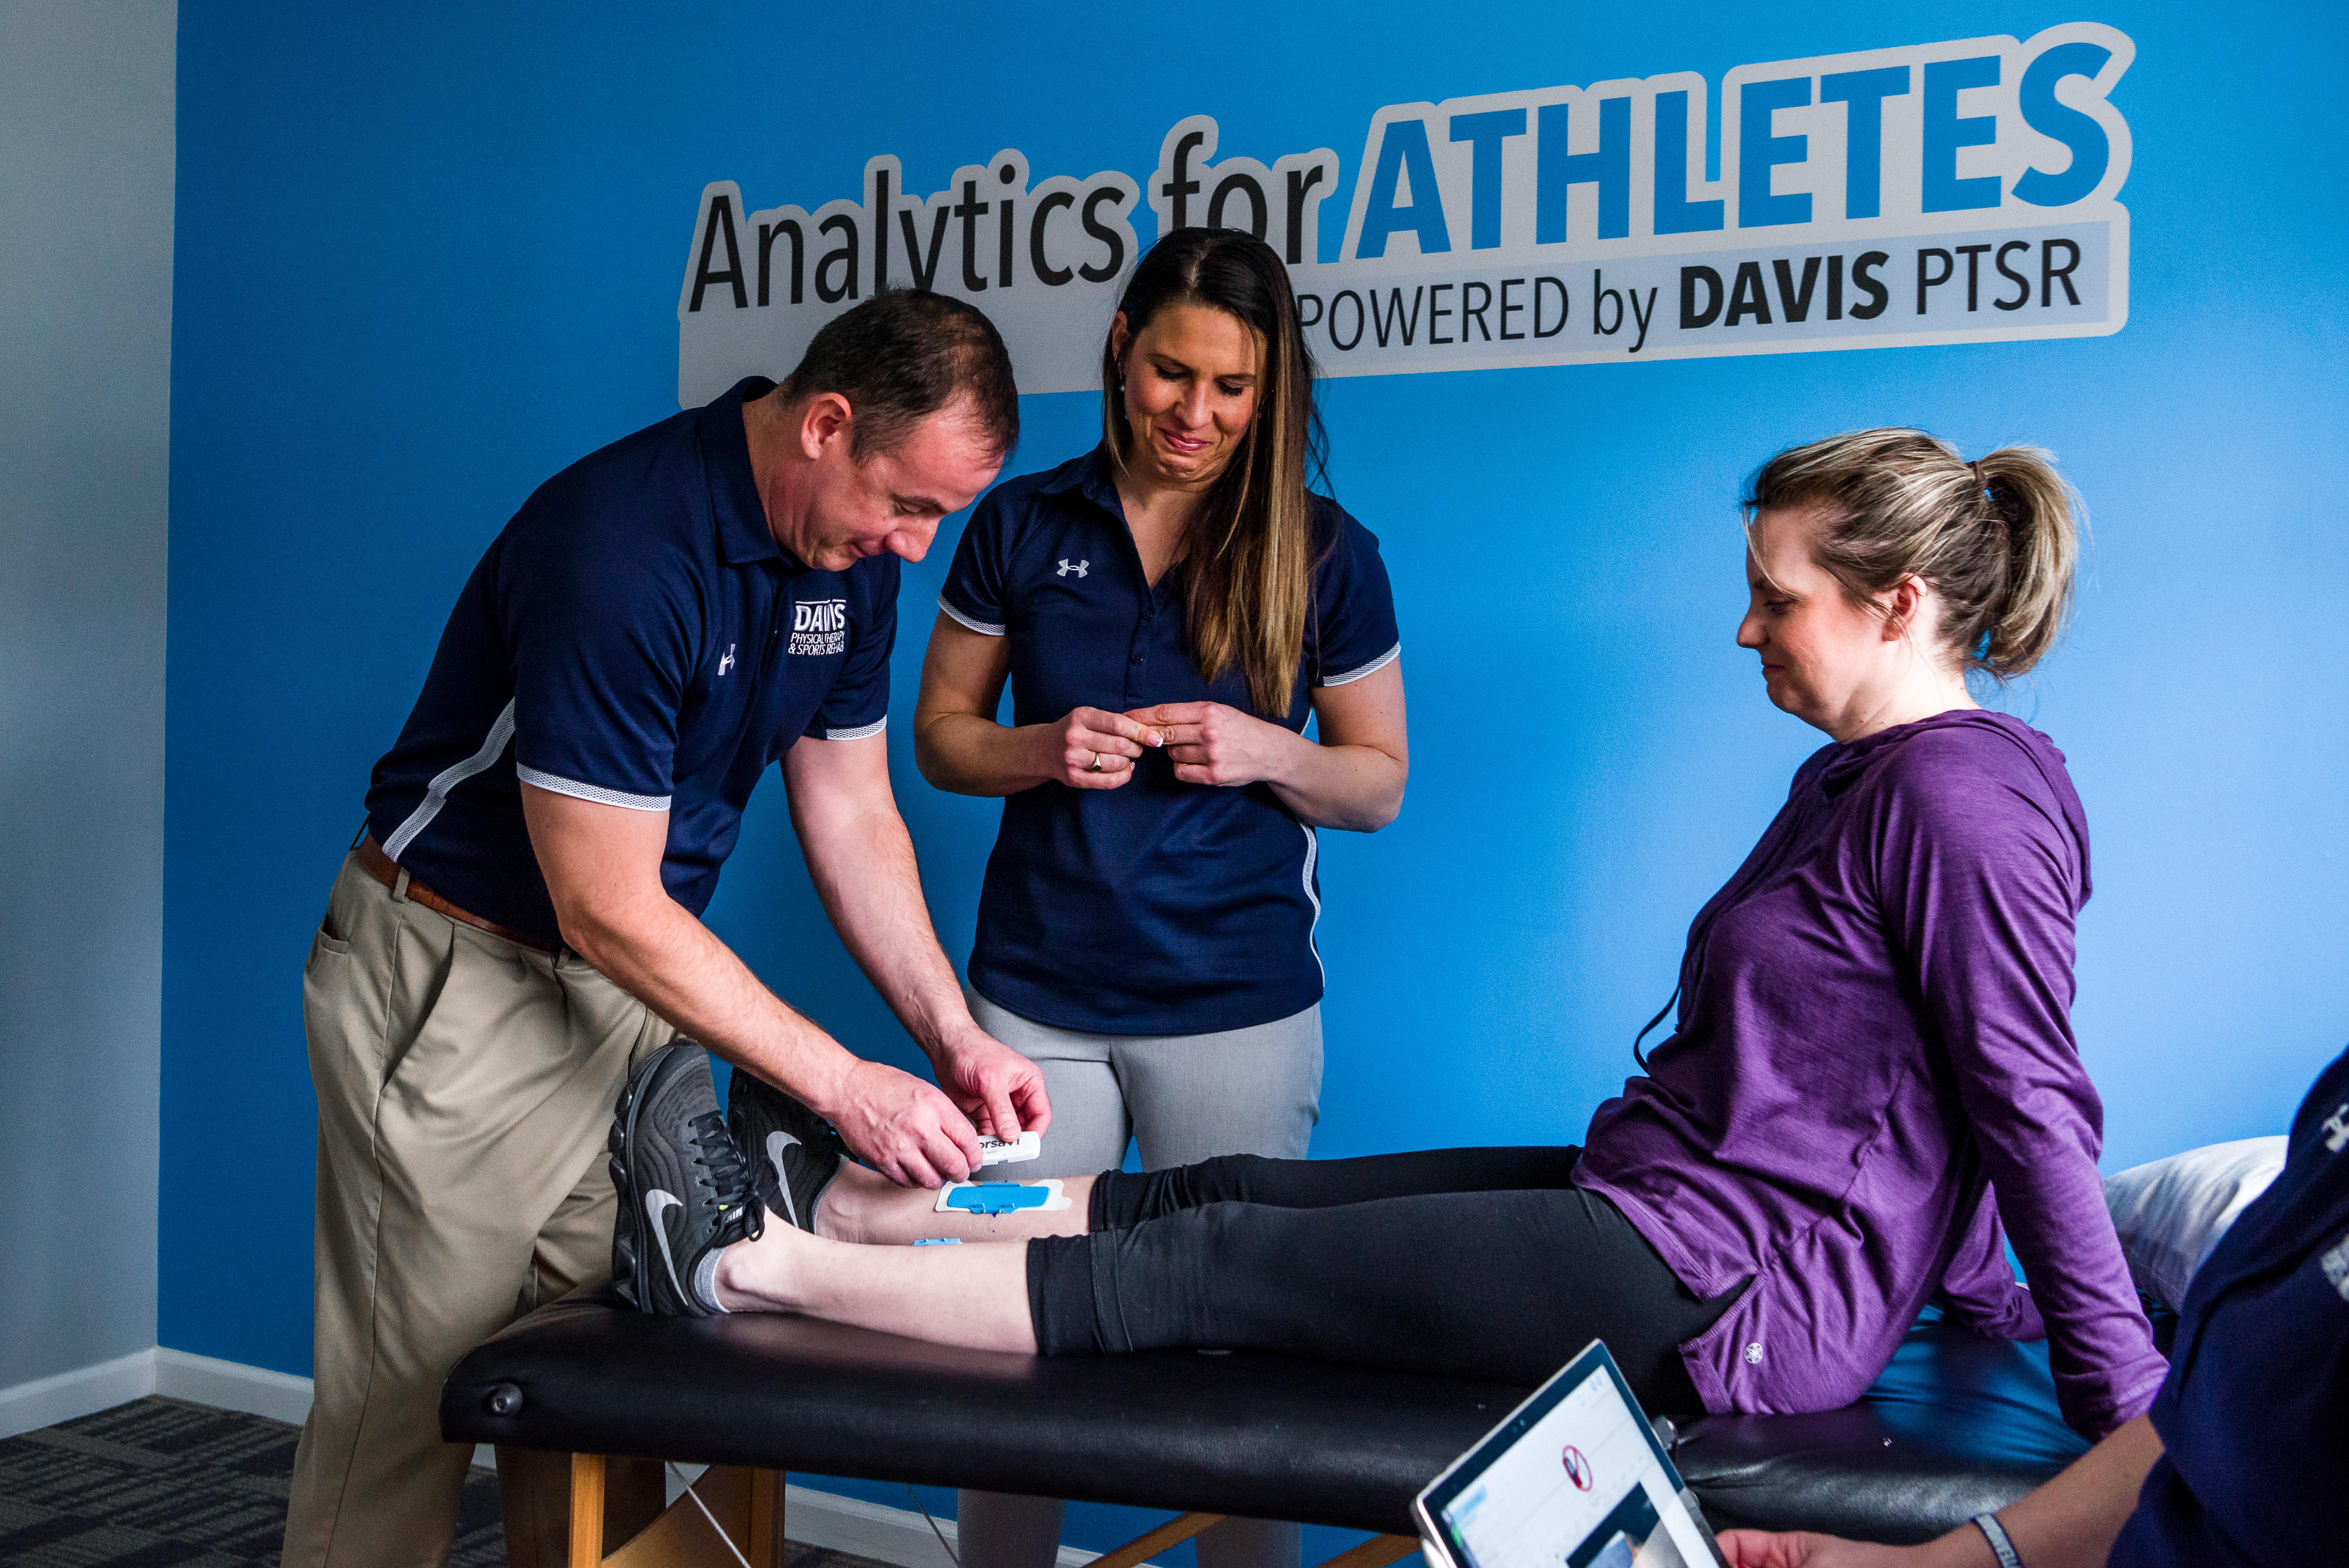 Davis Physical Therapy & Sports Rehab Medford (609)451-5404